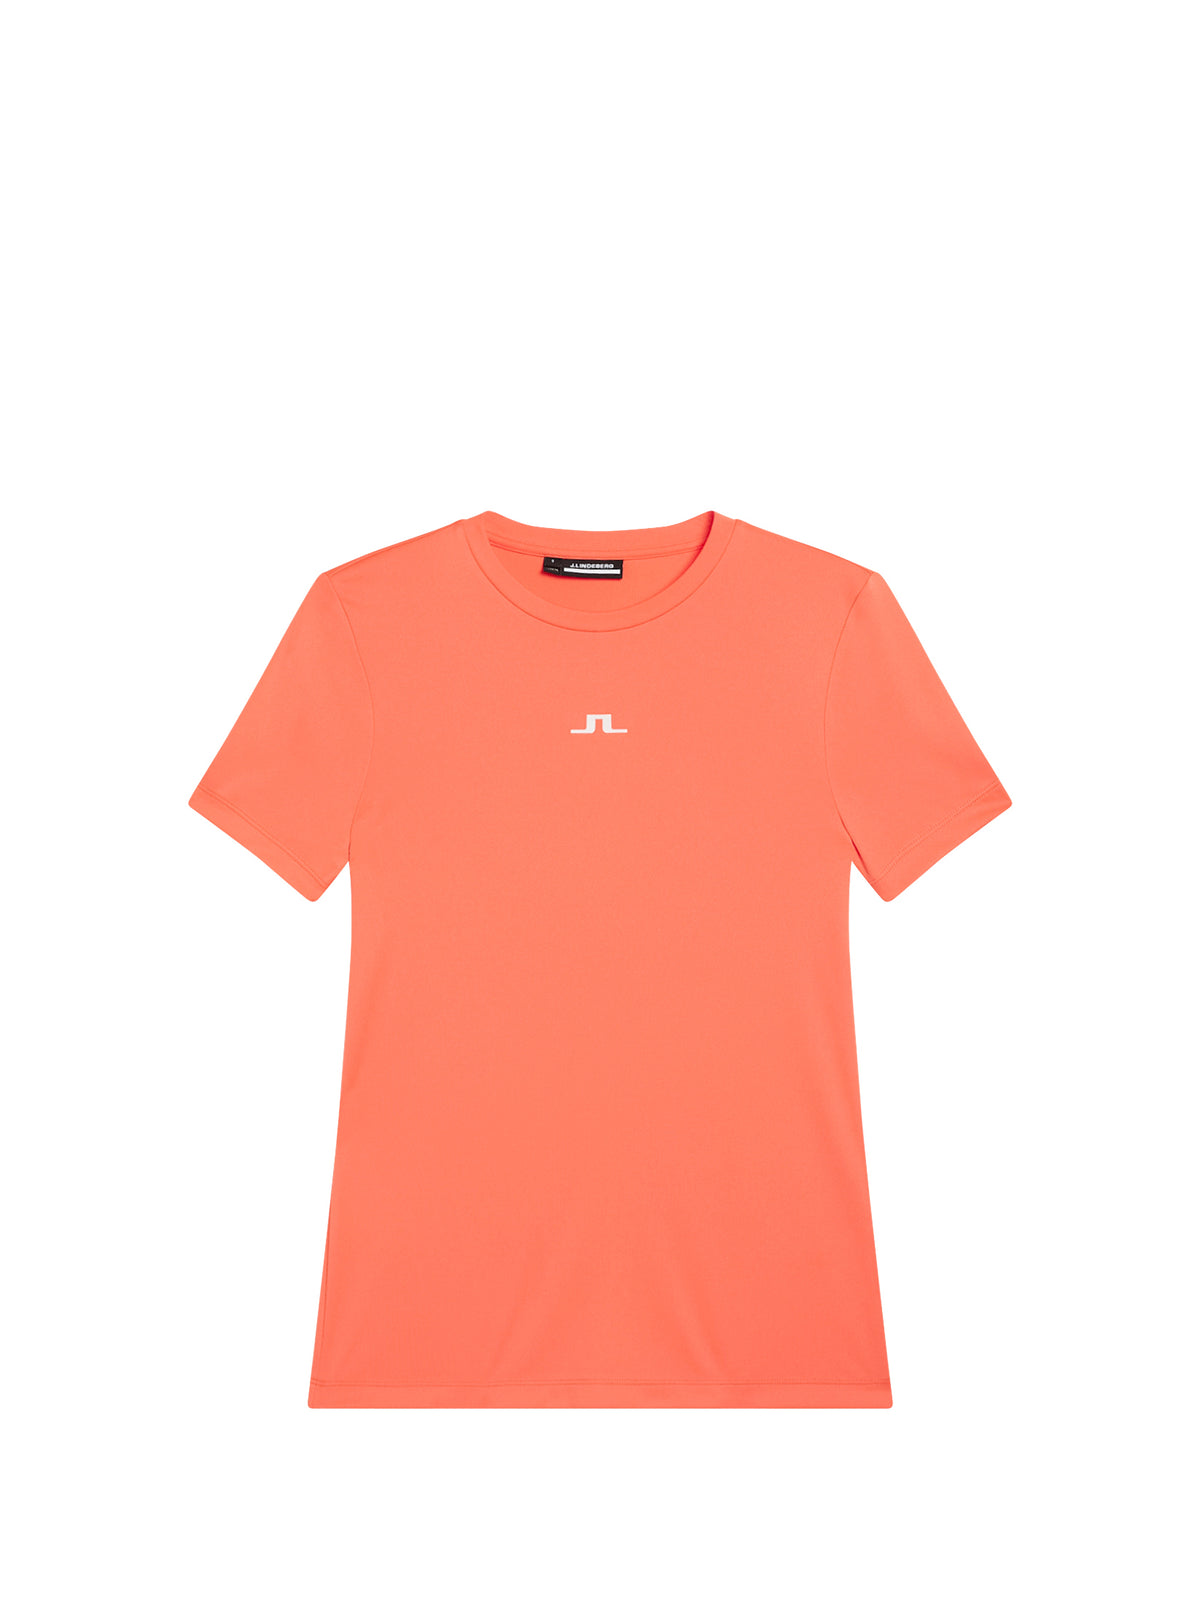 Ada T-shirt / Hot Coral